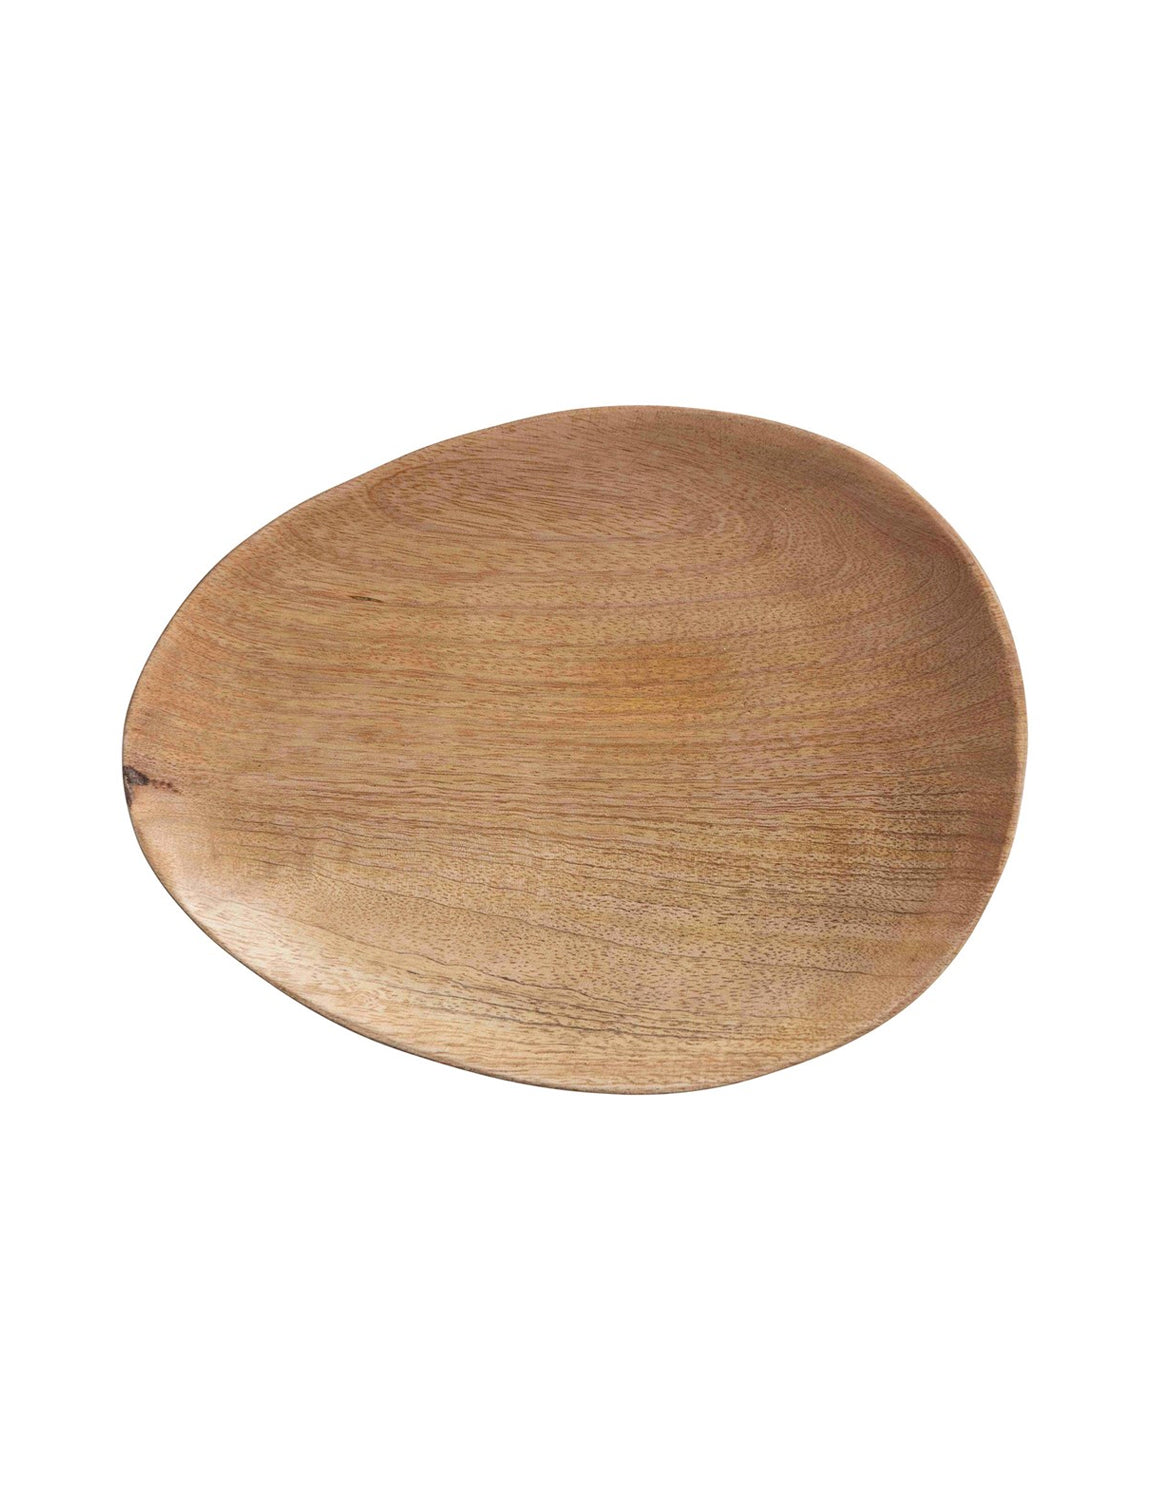 Mango Wood Serving Platter/Tray